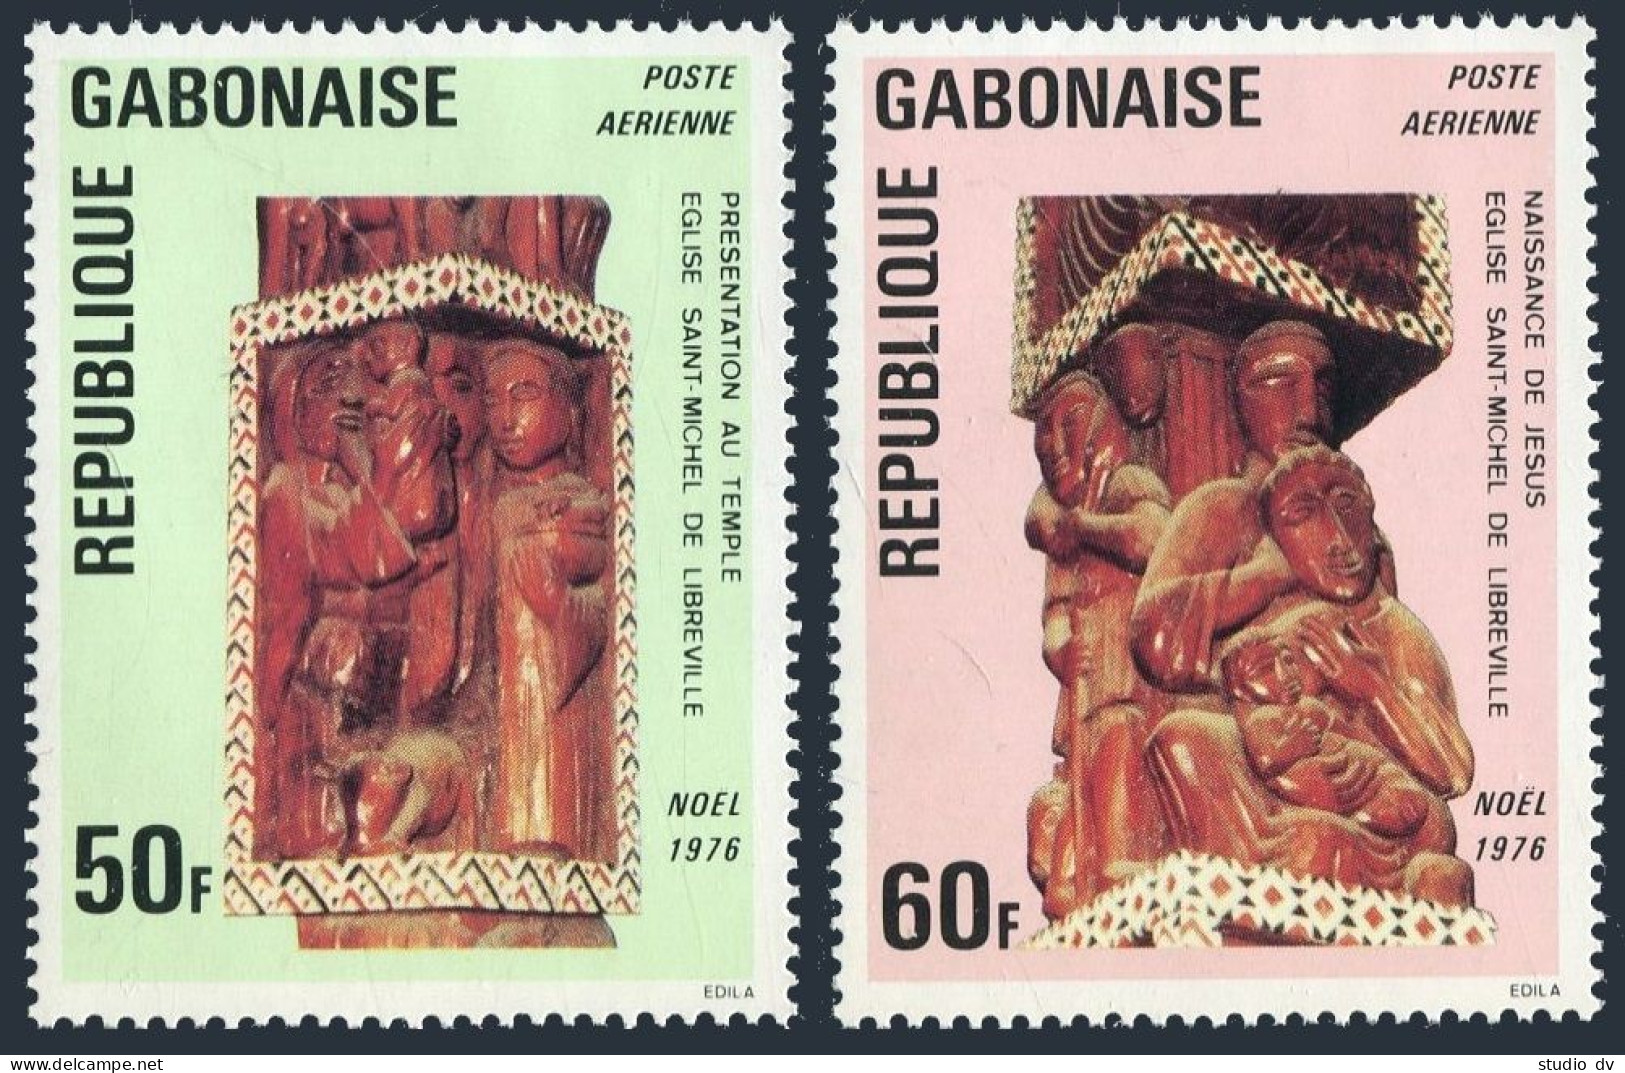 Gabon C188-C189,MNH.Michel 611-612. Christmas 1976.Sculptures. - Gabon